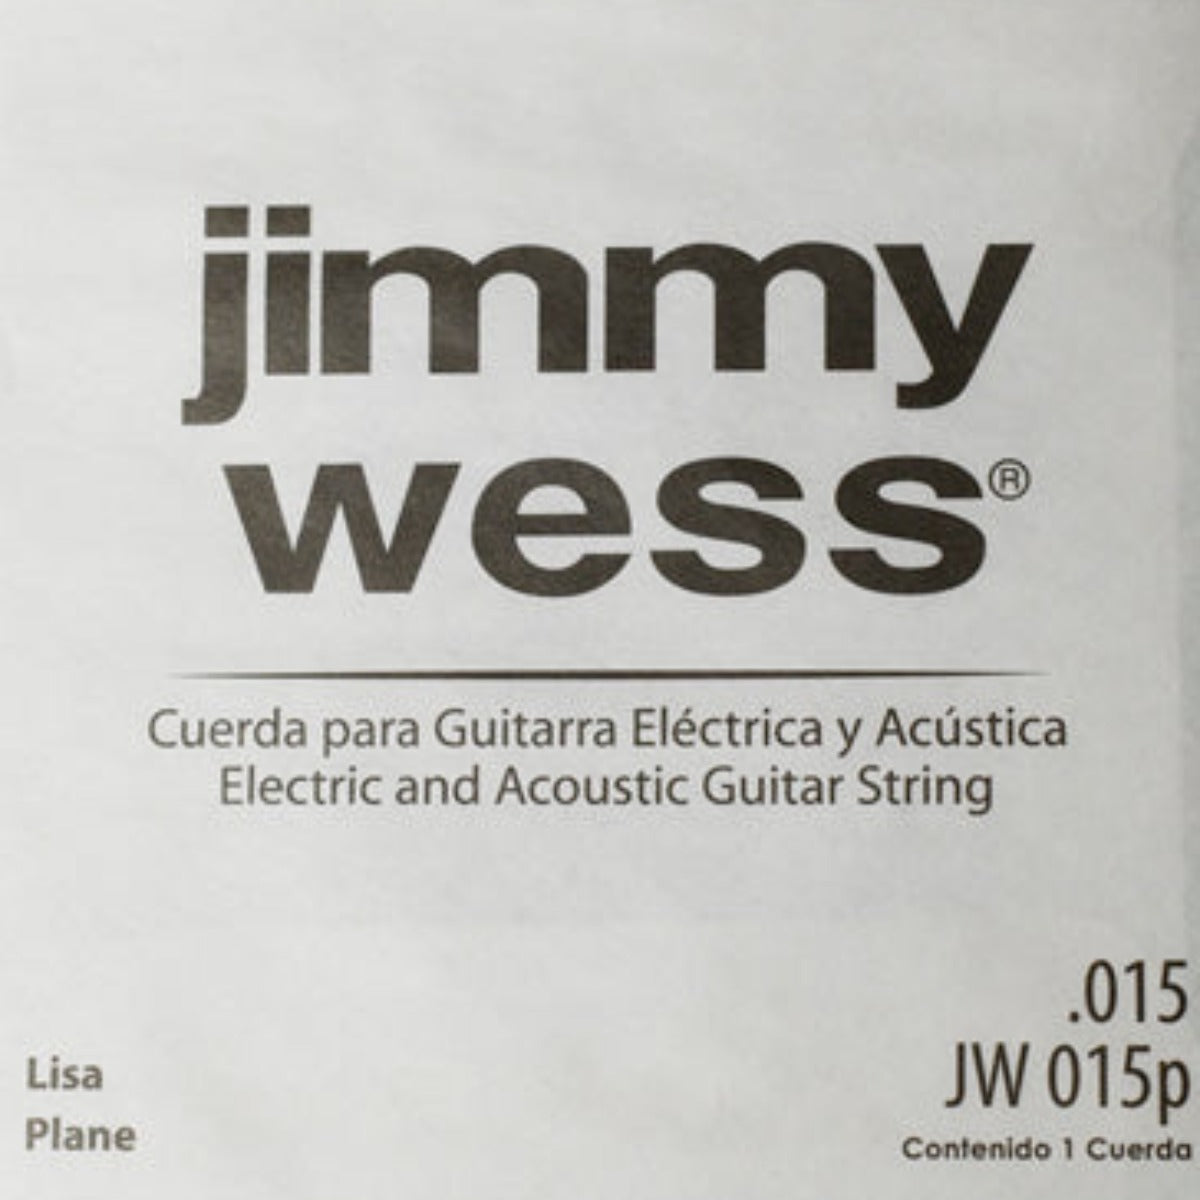 CUERDA P/GUITARRA ELECTRICA/ACUSTICA JIMMYWESS LISA (015)